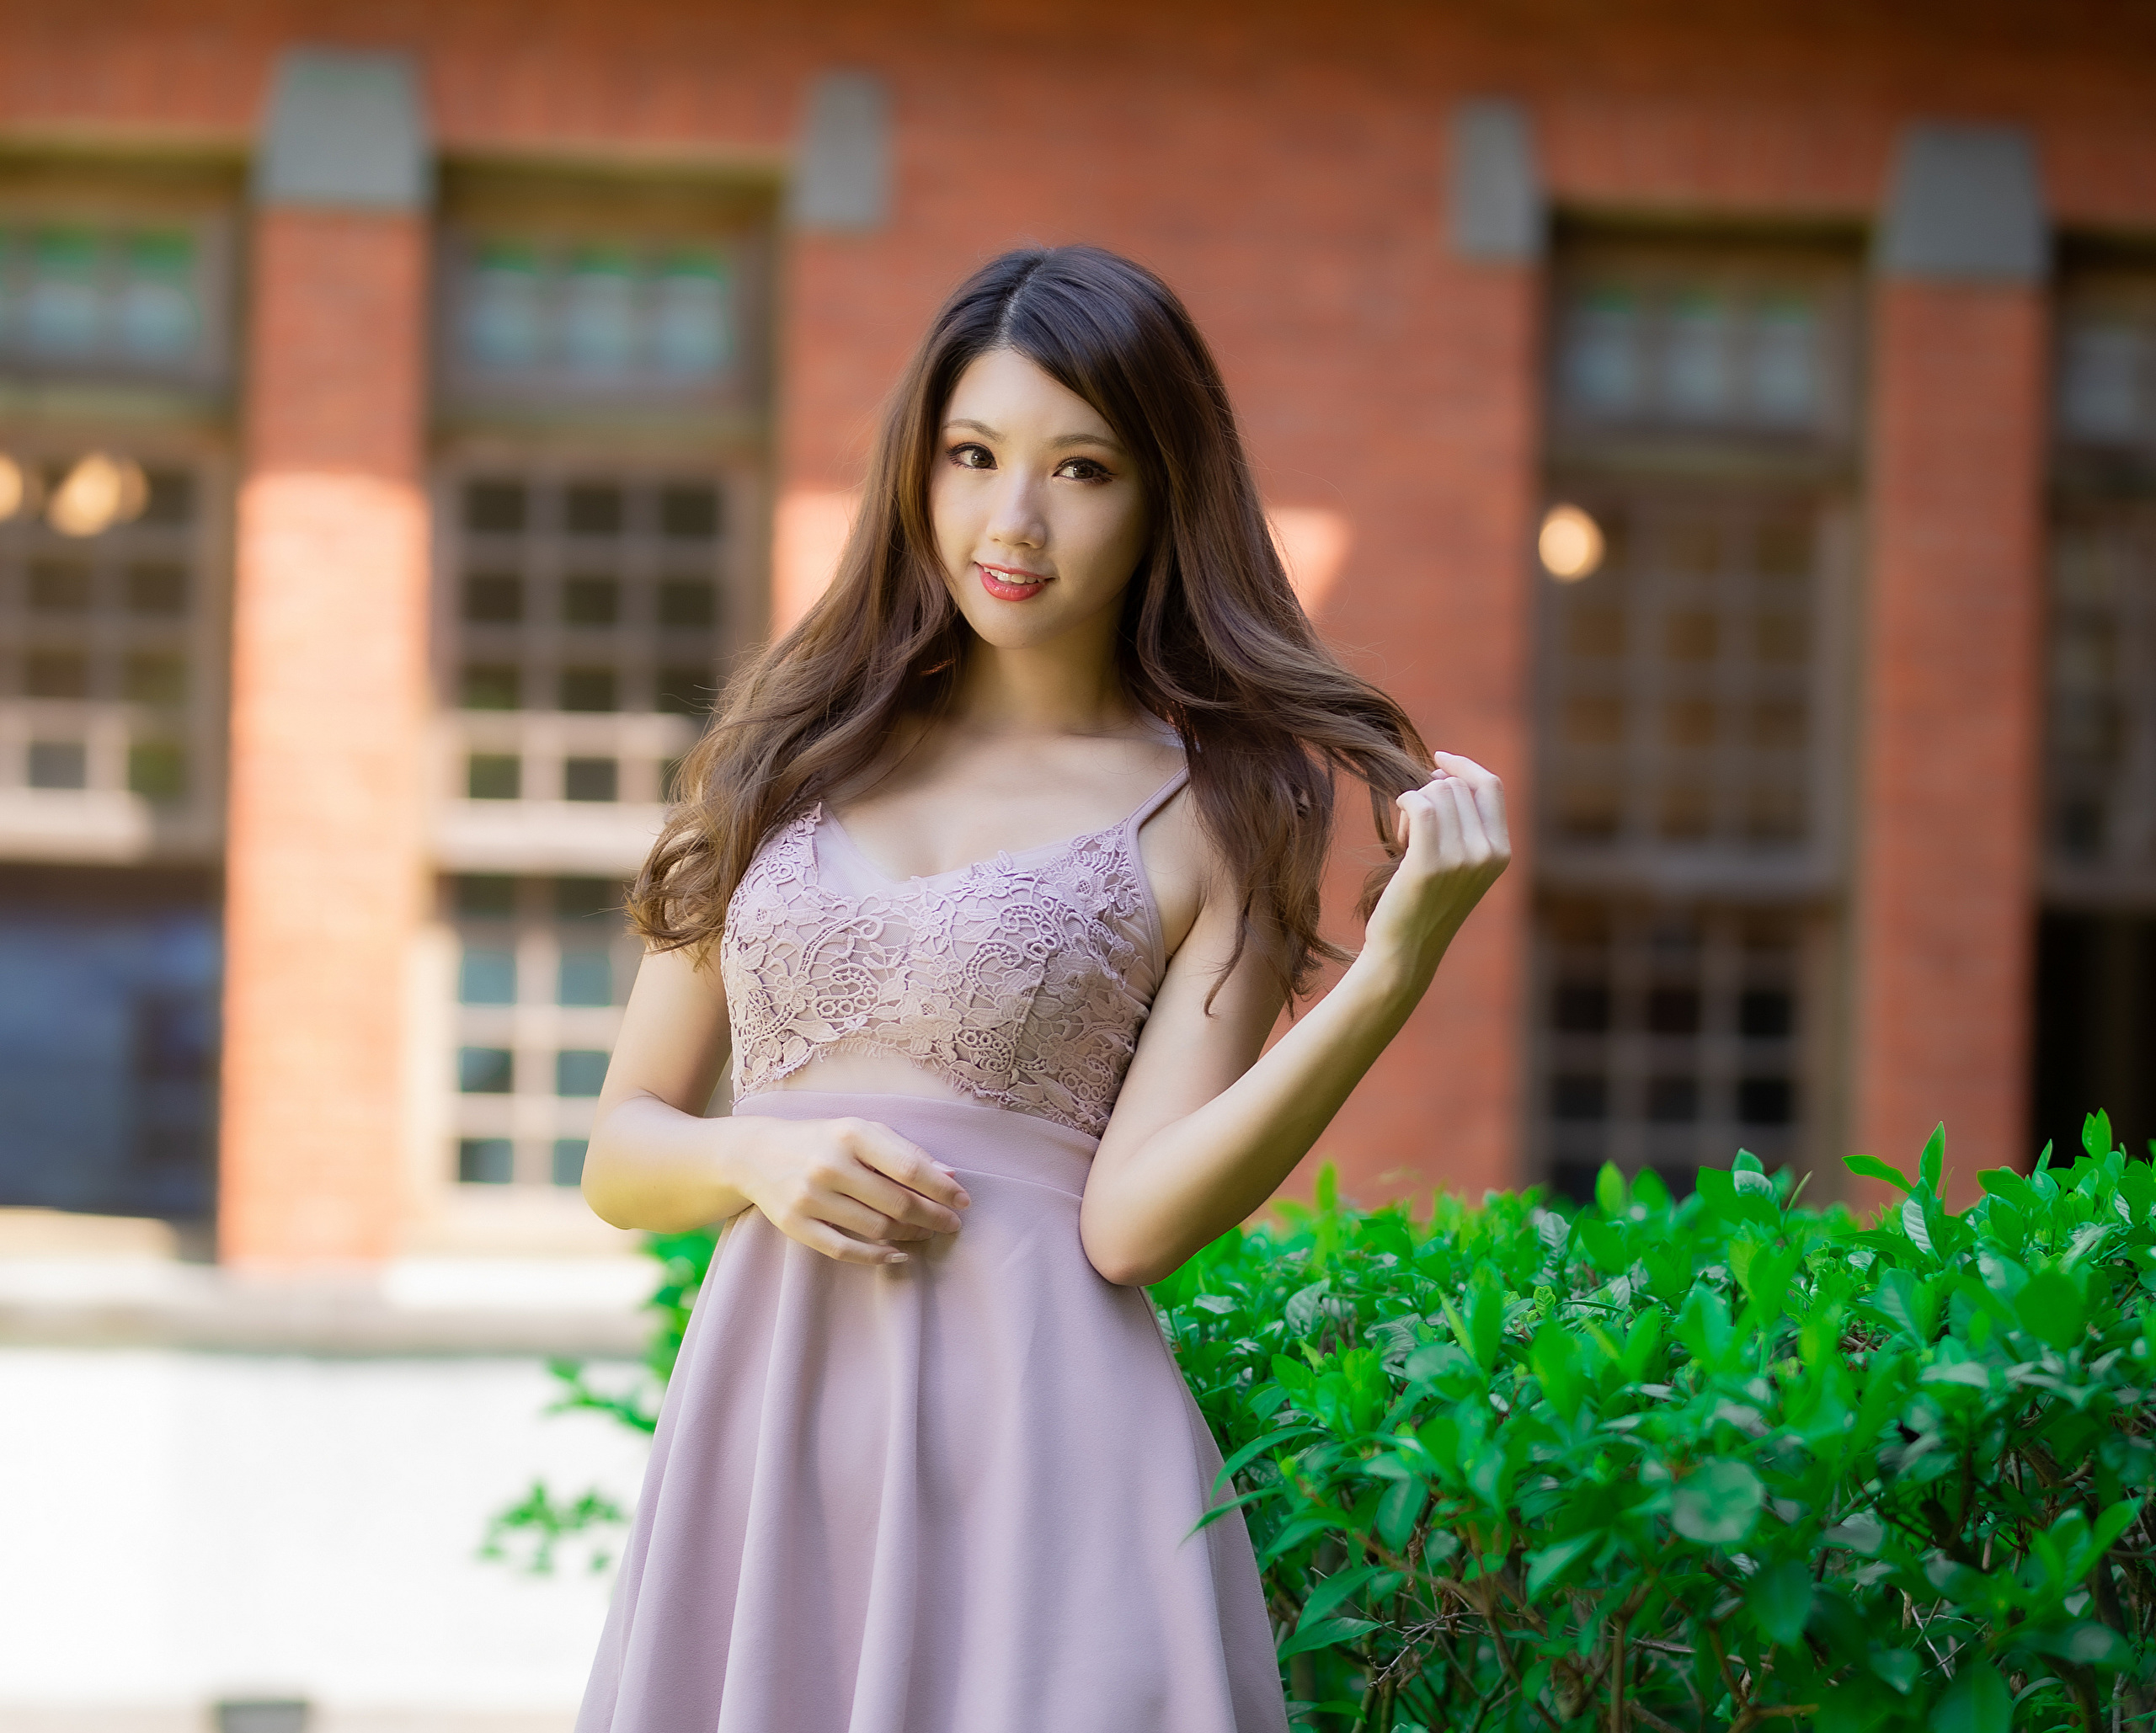 Asian Model Women Long Hair Brunette Dress Bushes Building Depth Of Field 2560x2058